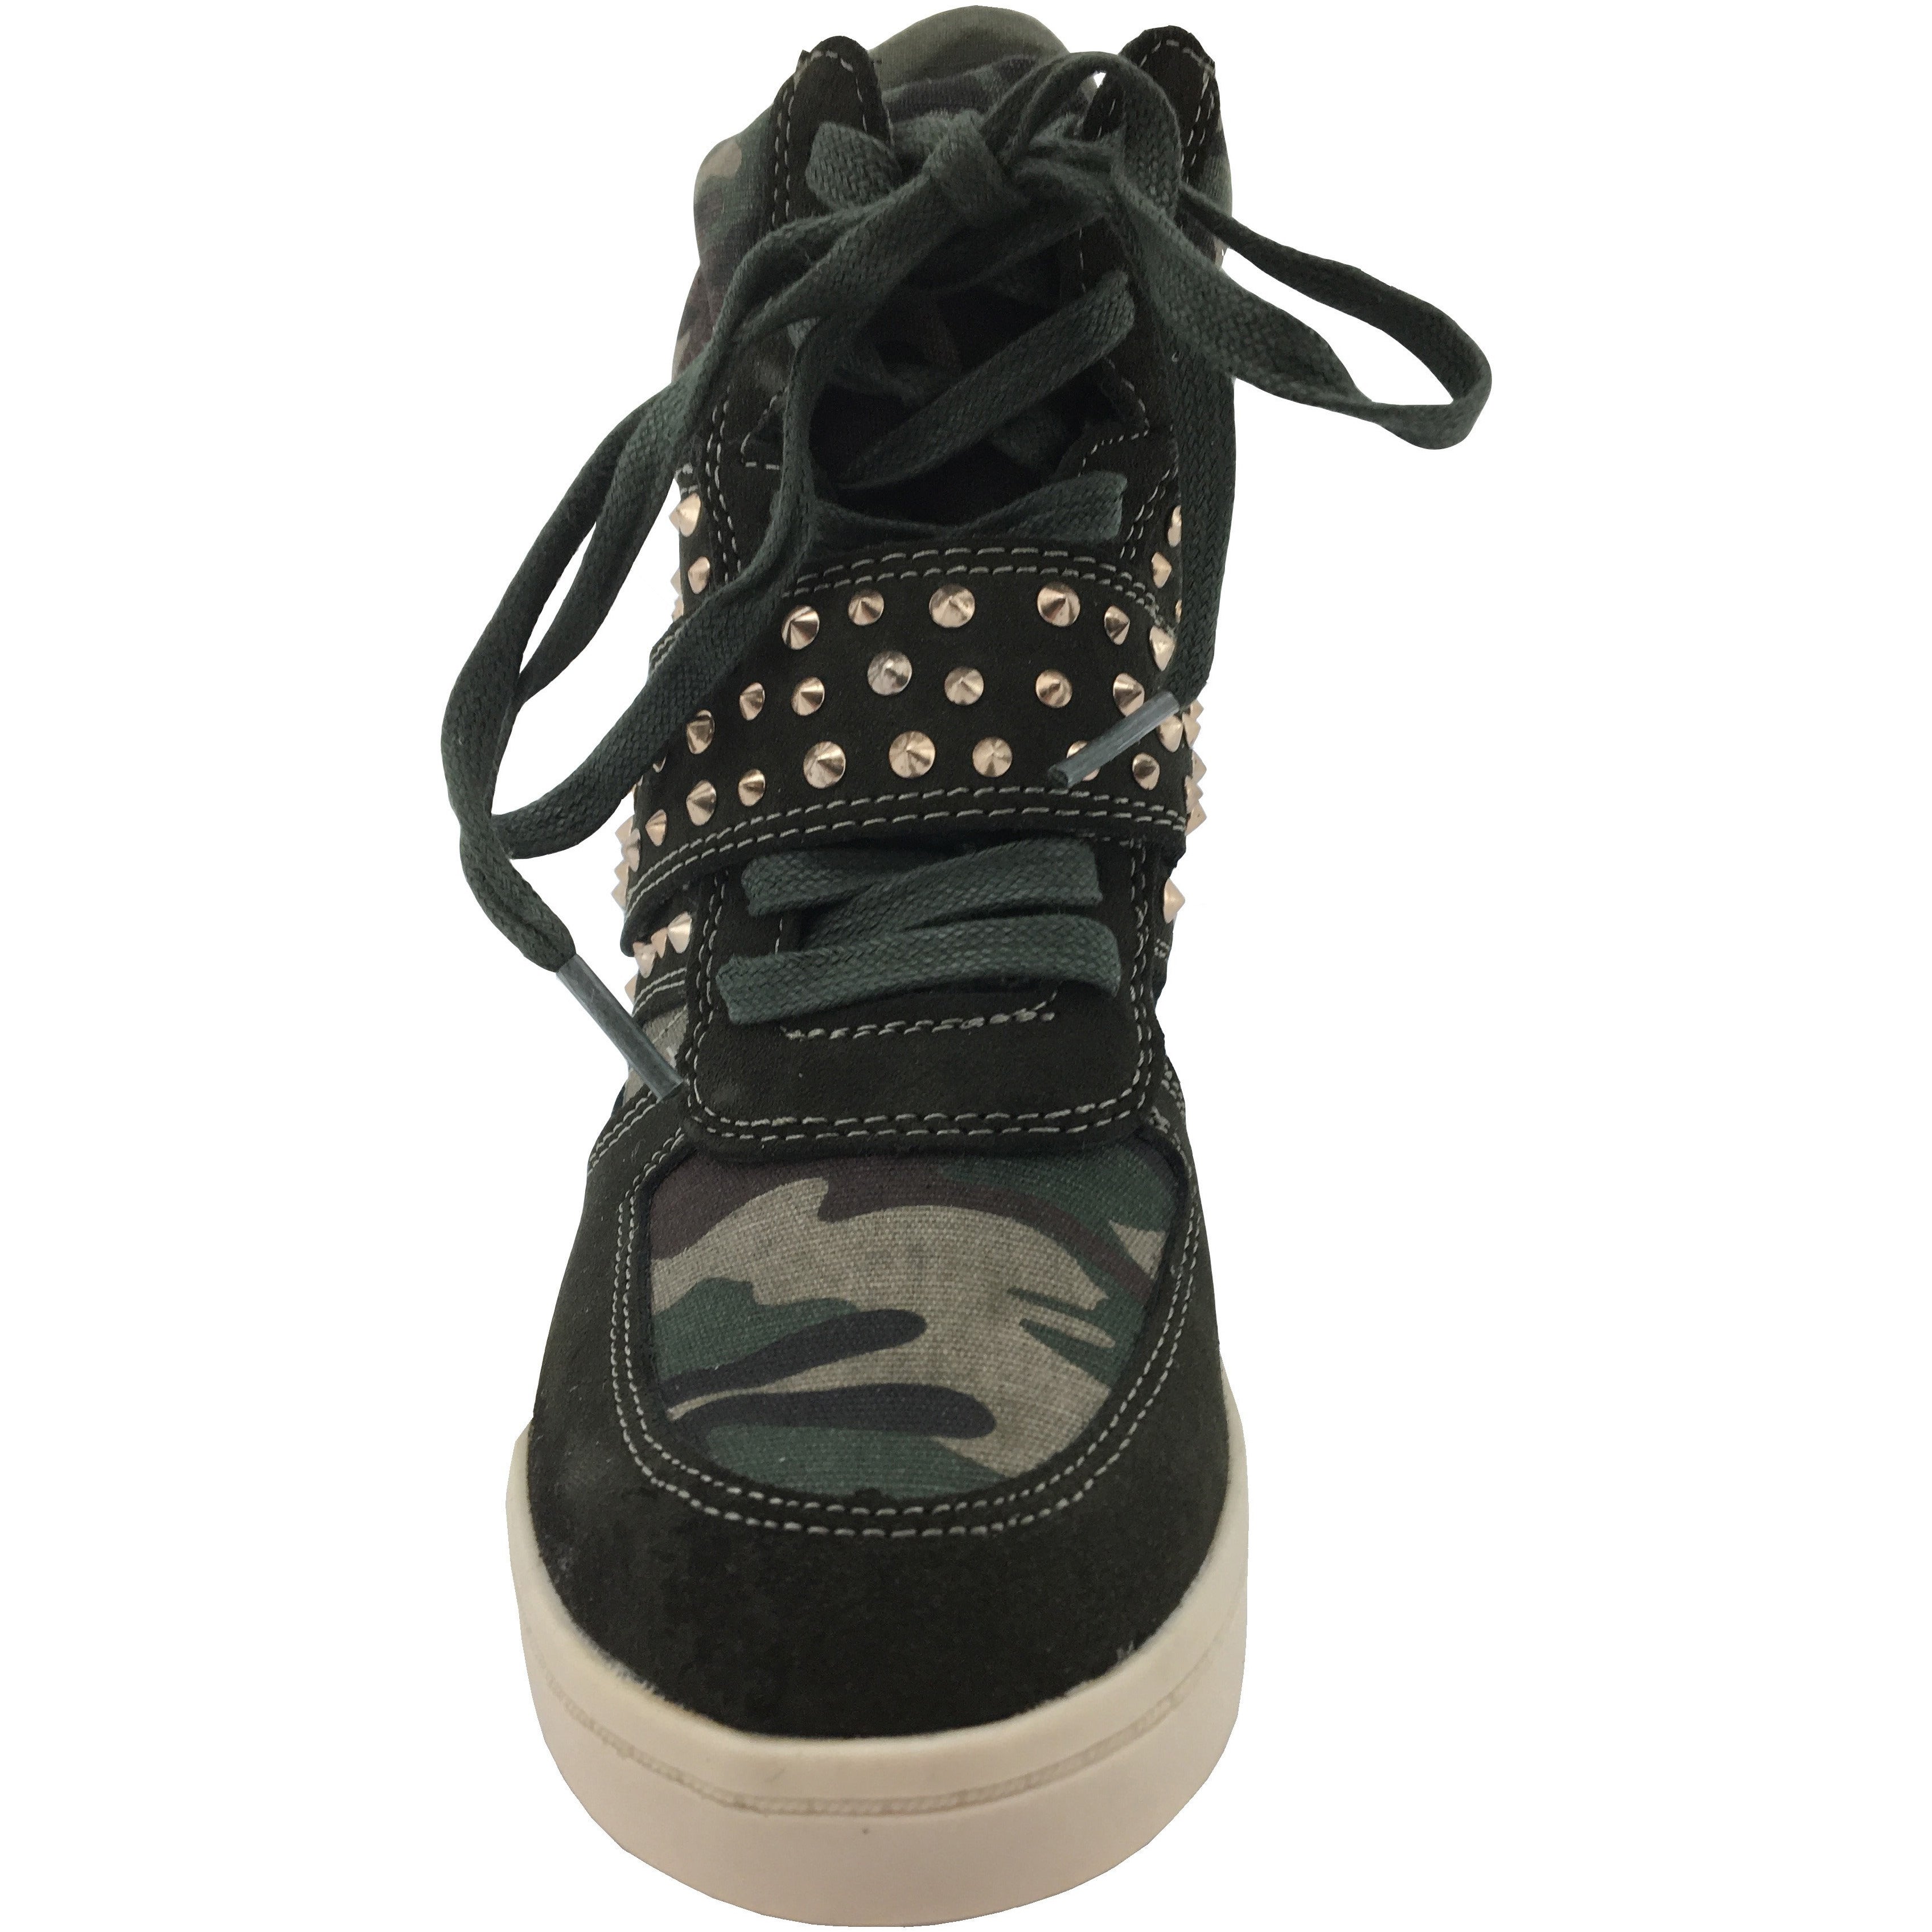 Zigi Soho Women's Studded Wedge Heeled Shoe / Green Camo / Fashion Sneaker / Various Sizes